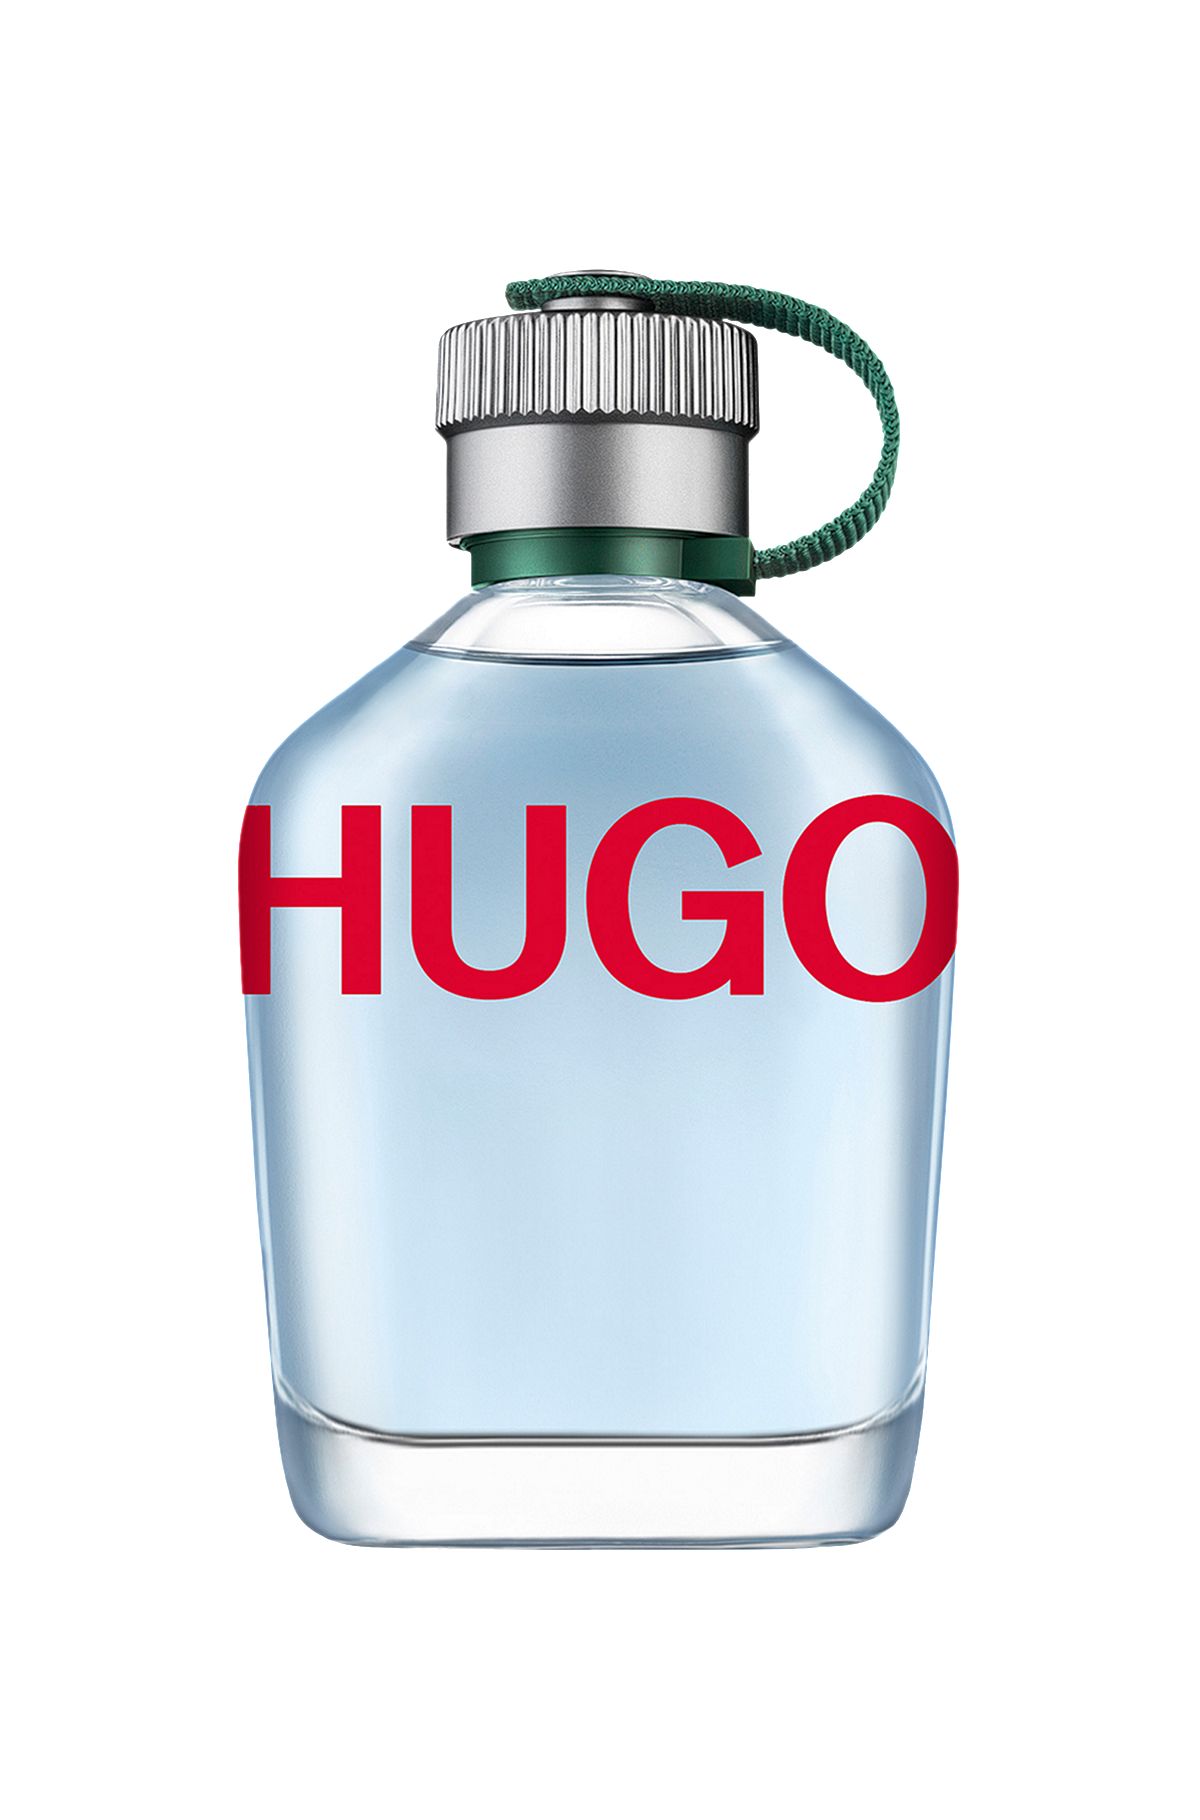 HUGO Man eau de toilette 125ml, Assorted-Pre-Pack